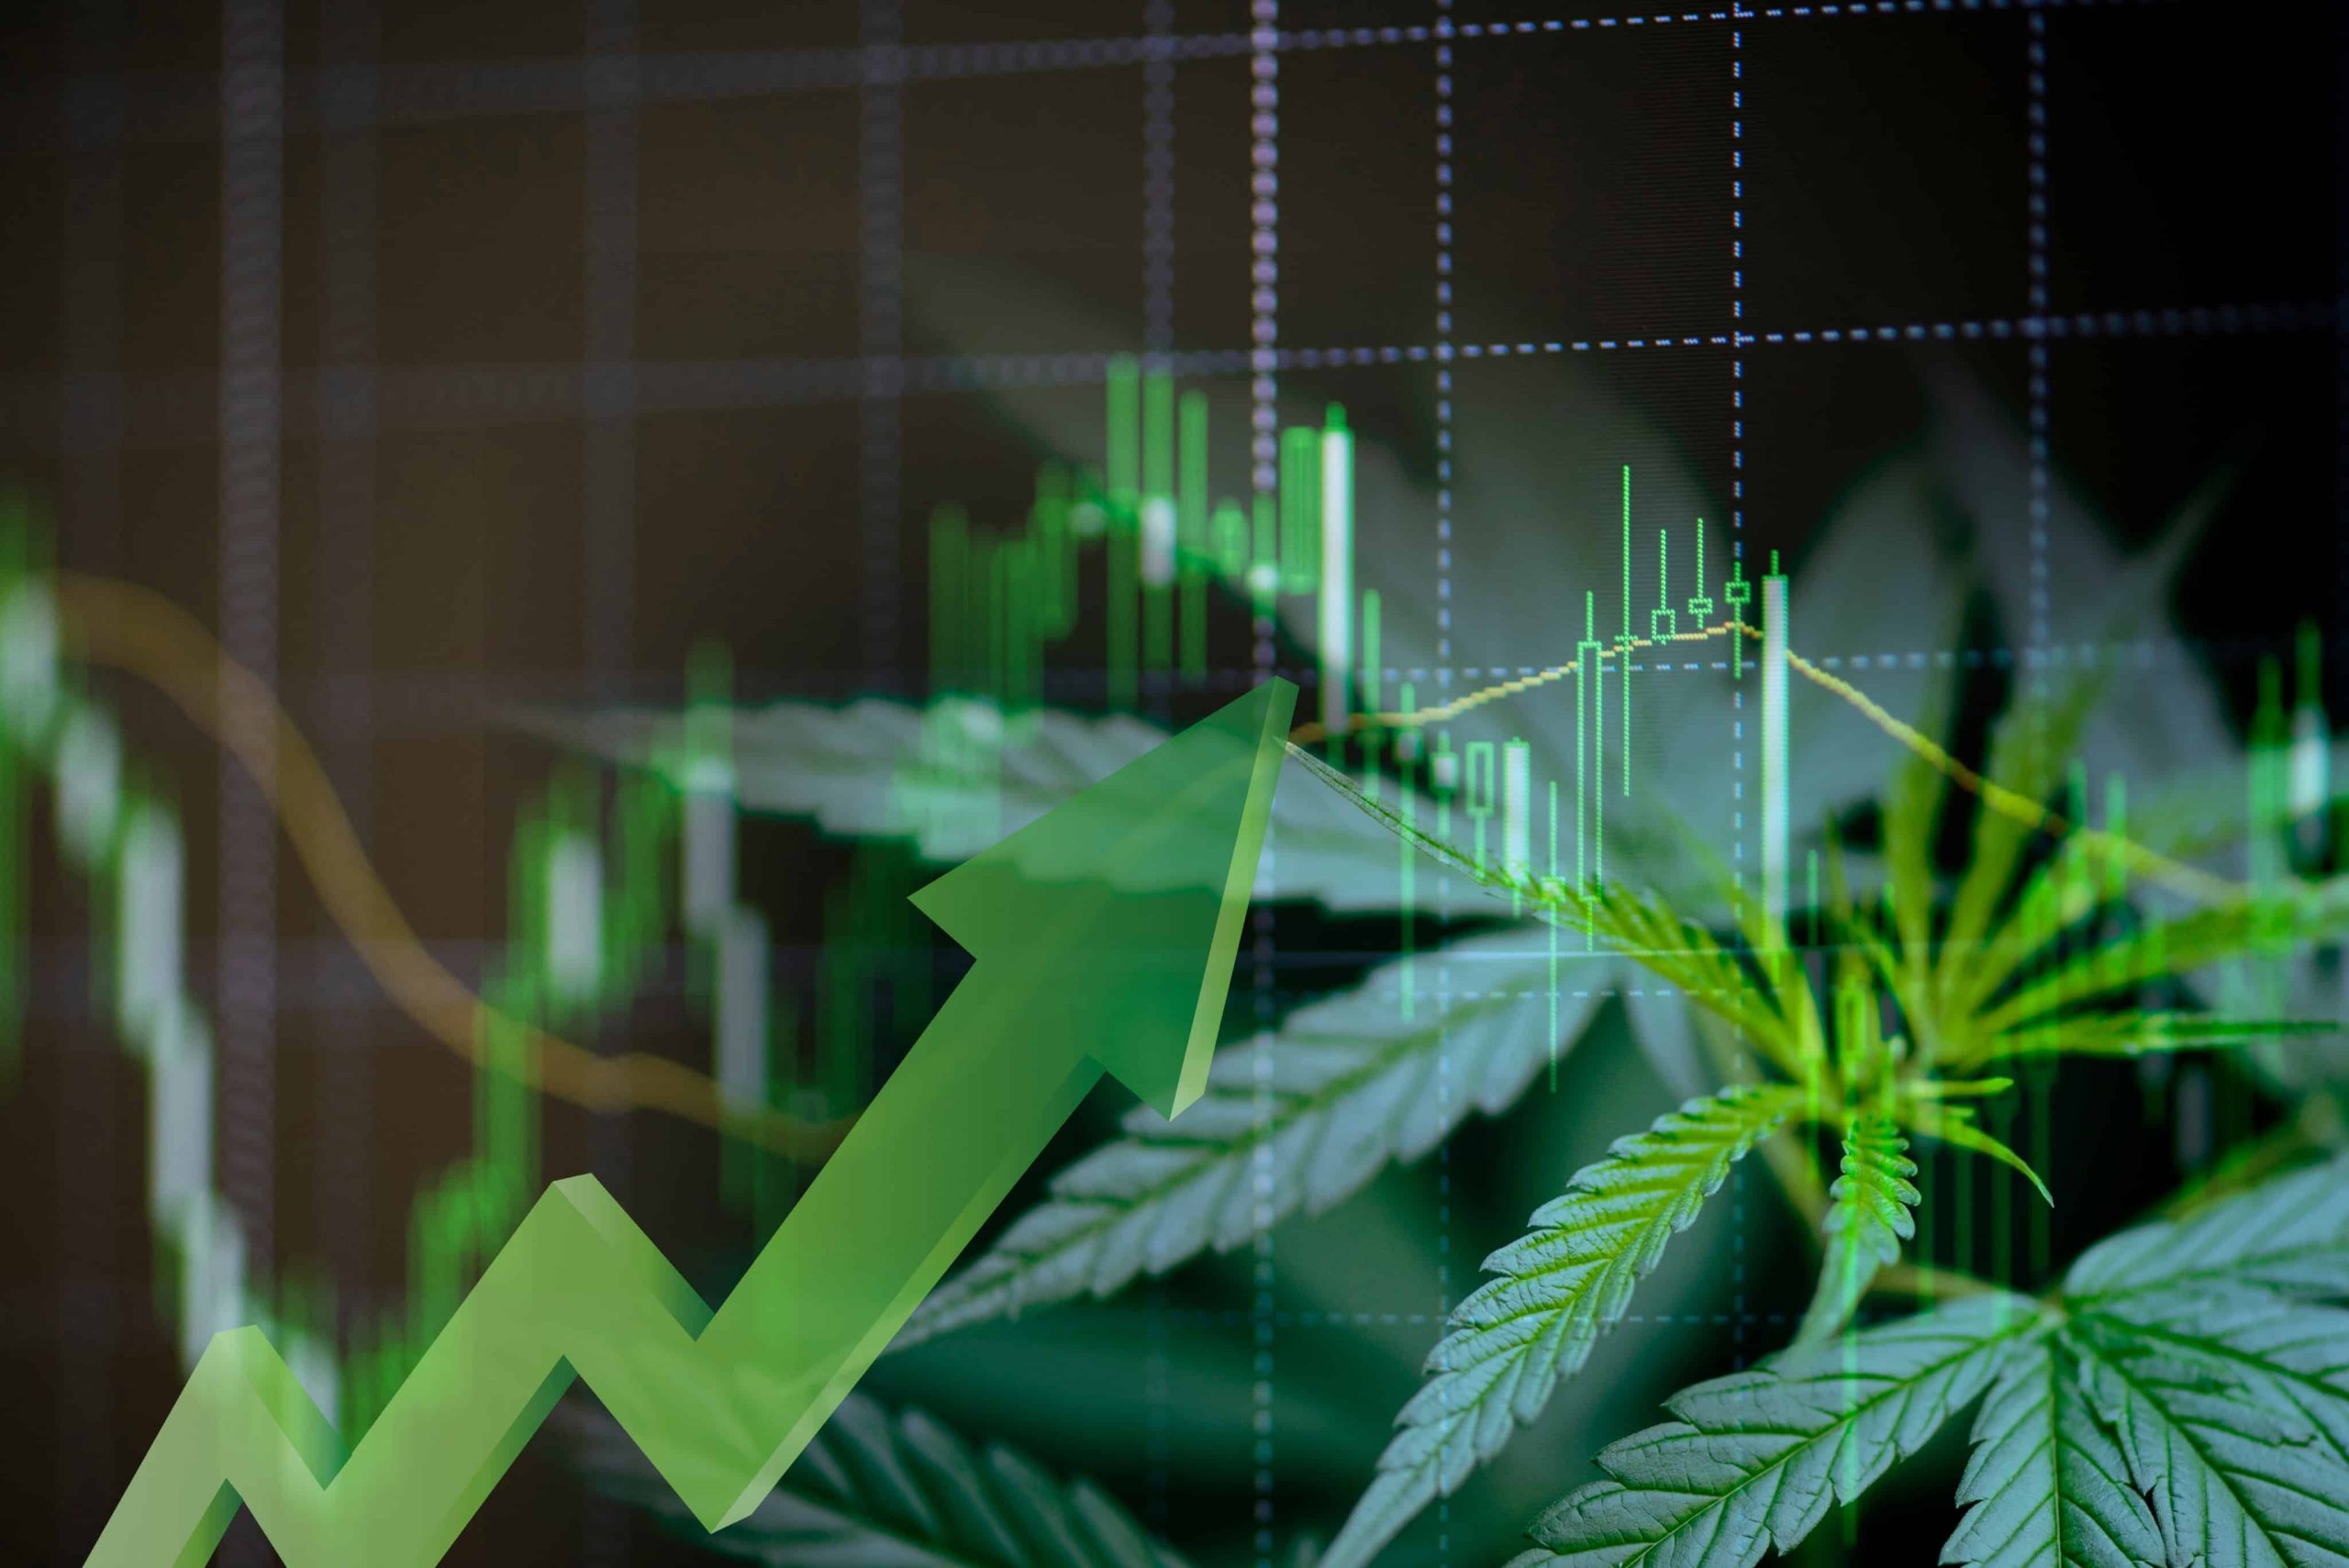 Legislative Report Projects $72 Billion Cannabis Industry By 2030